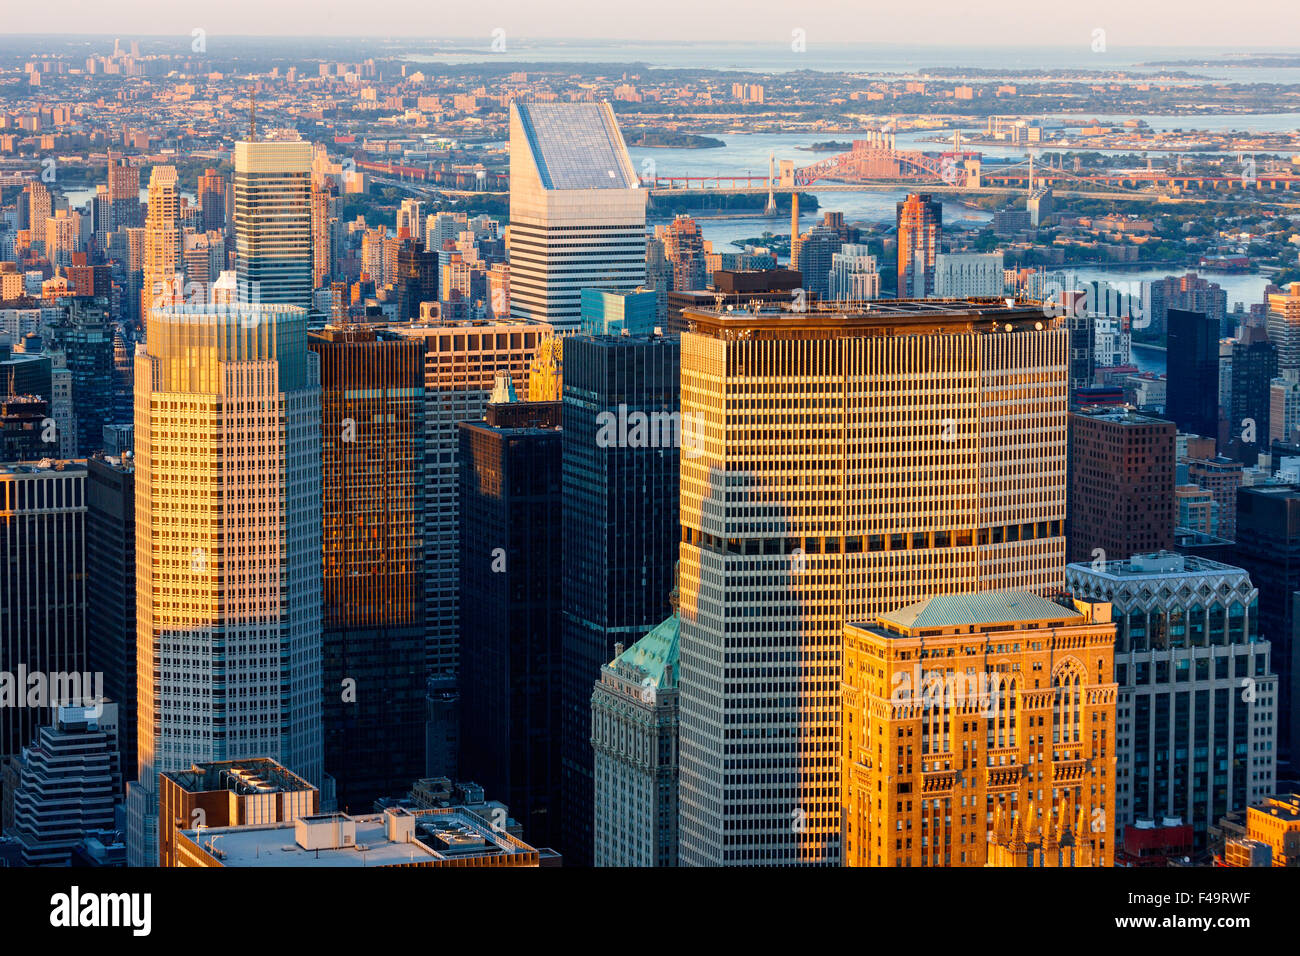 Aerial view of Midtown Manhattan skyscrapers at sunset. New York City skyline. USA Stock Photo